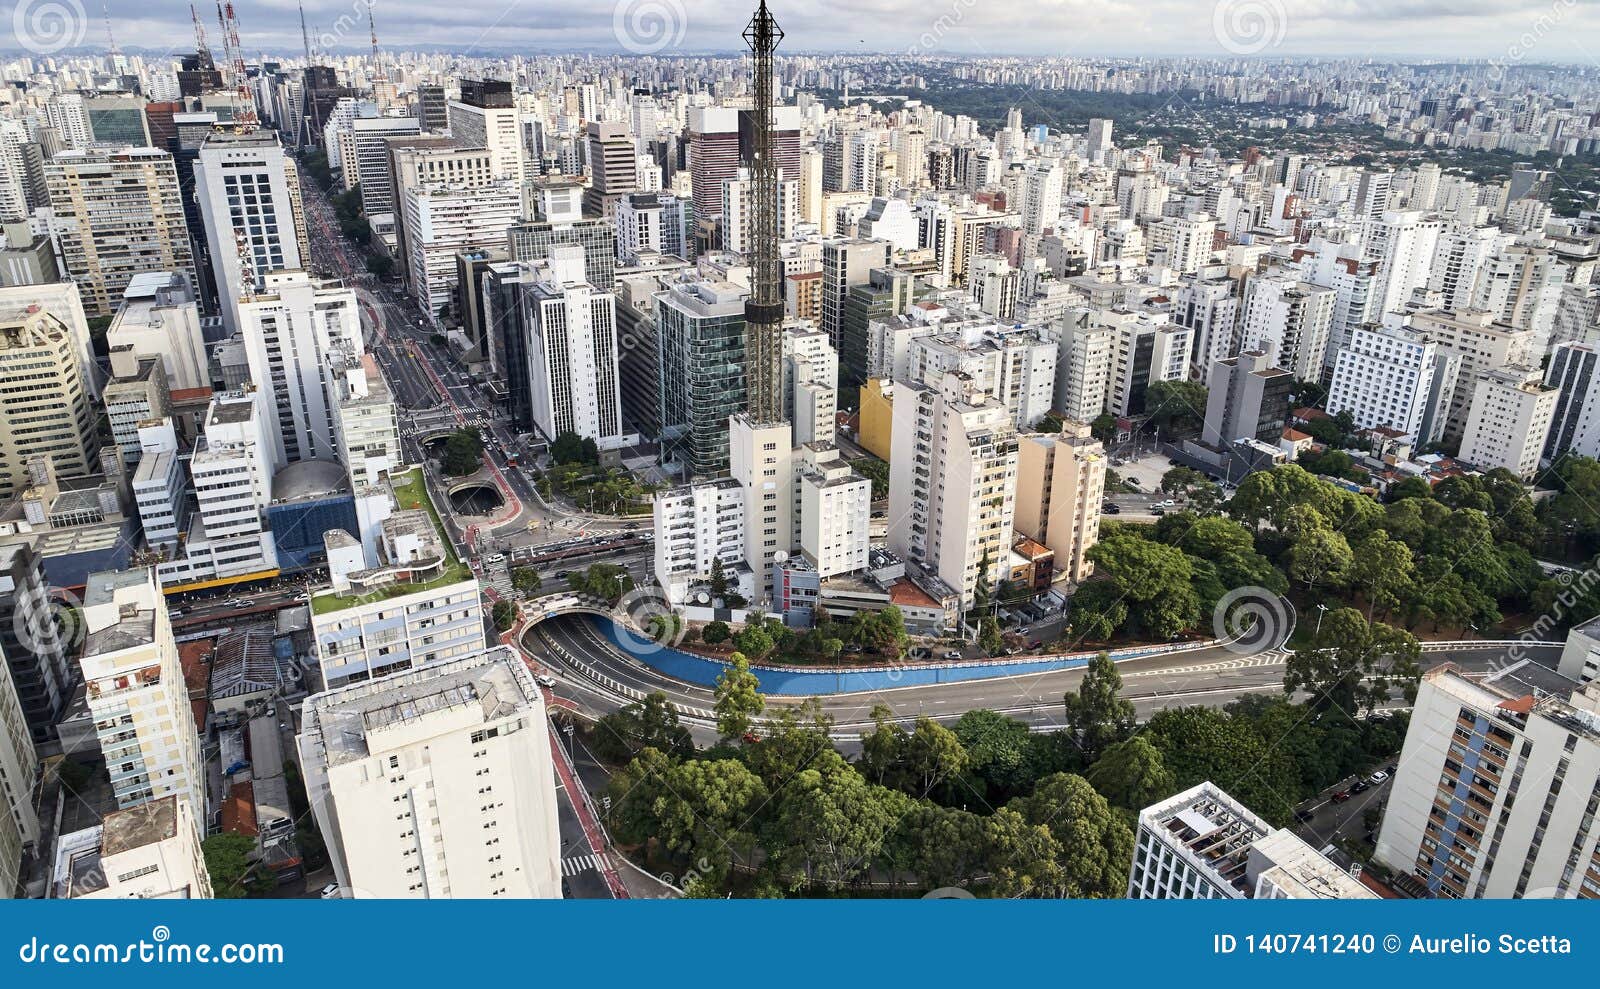 avenida paulista in sao paulo city, brazil